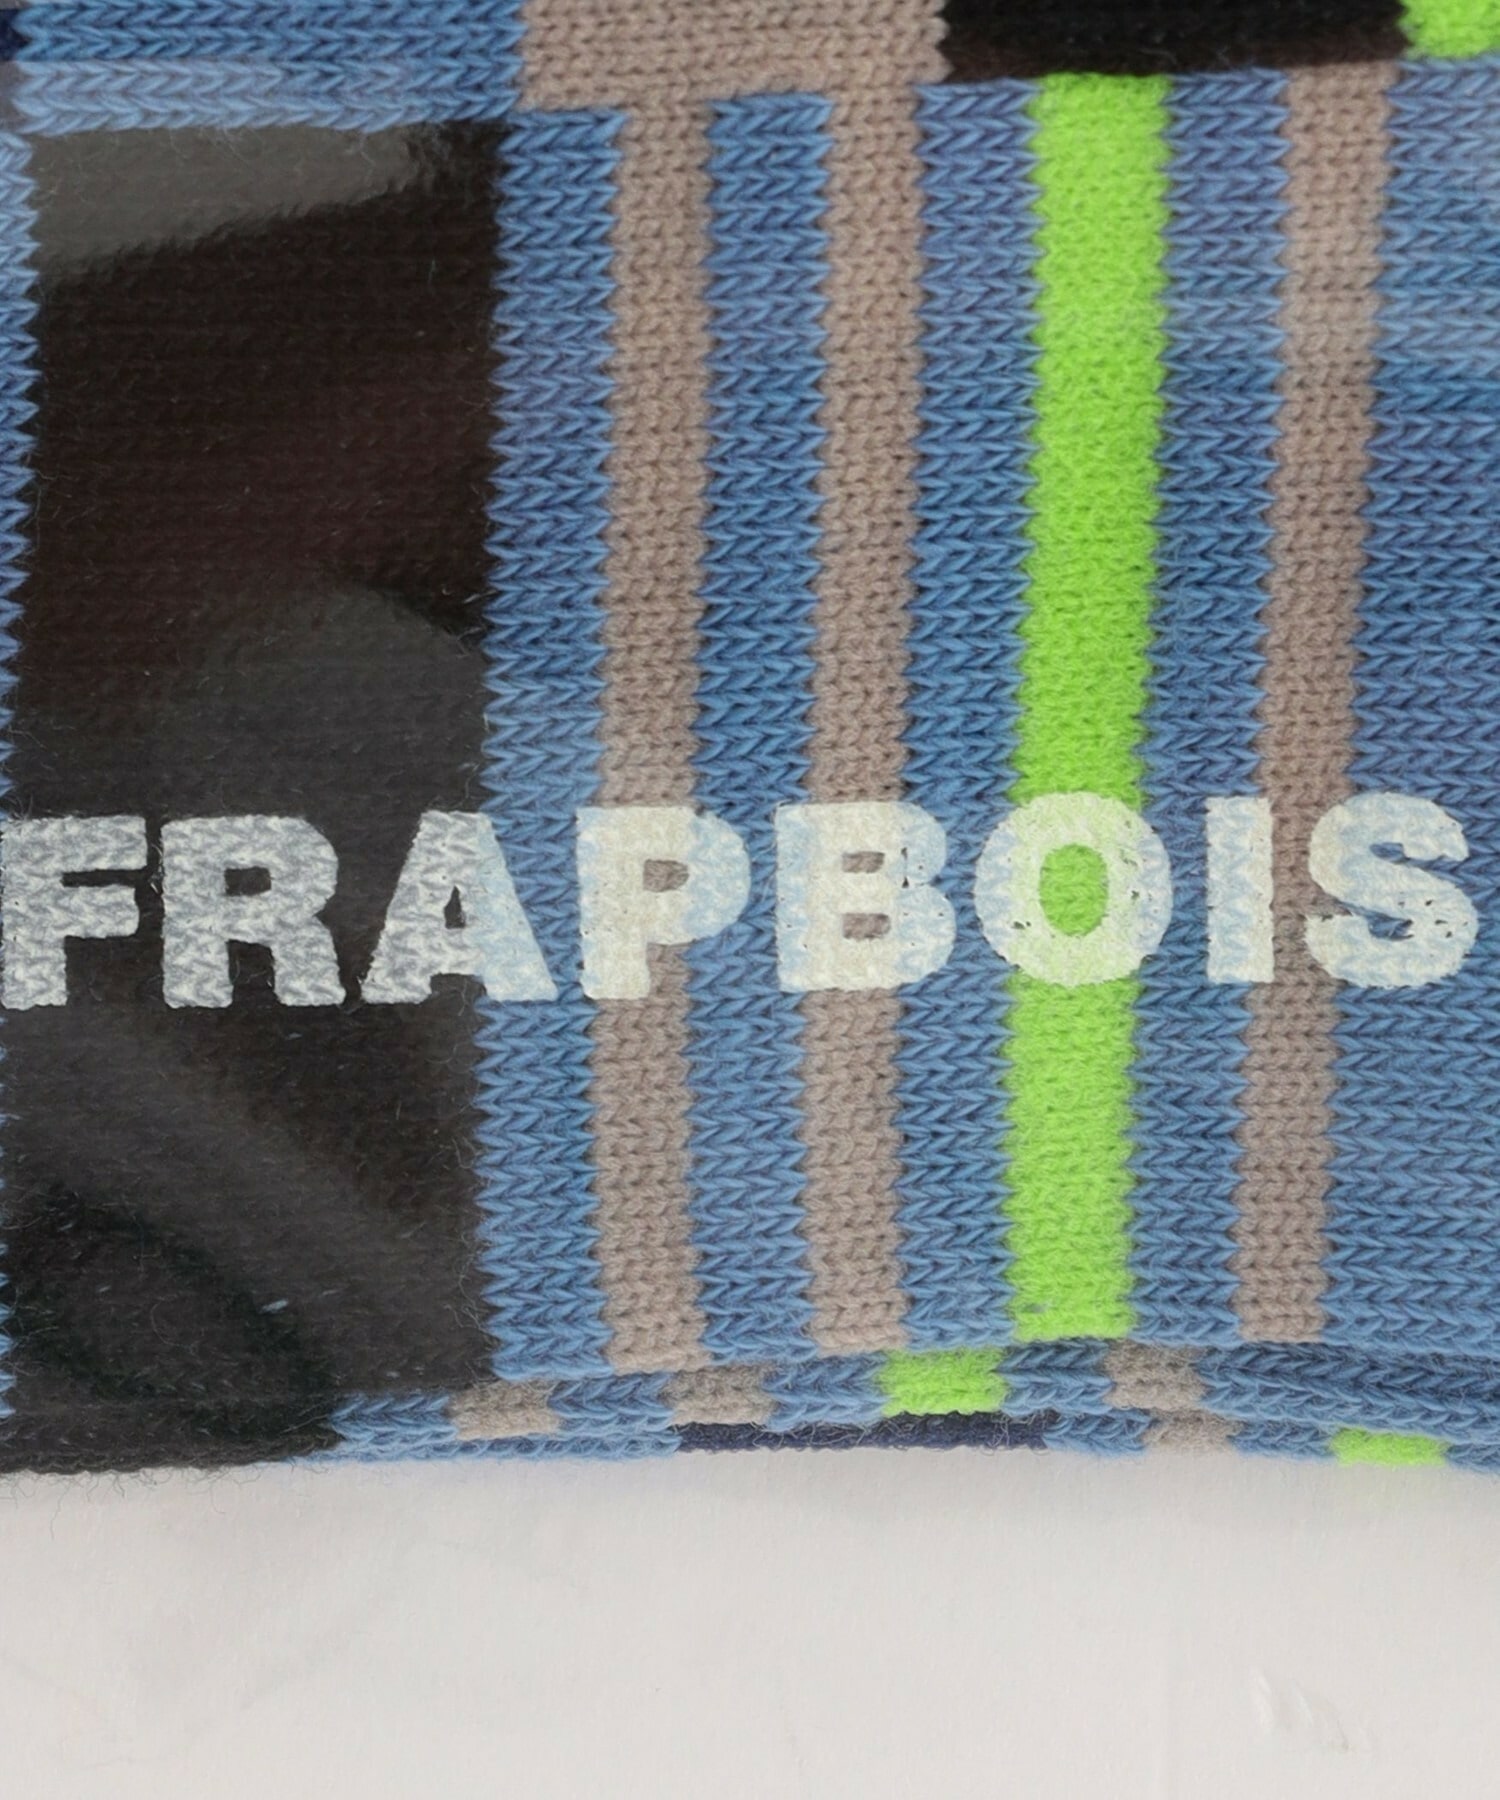 【FRAPBOIS】マルチボーダーソックス 詳細画像 ブラウン 3